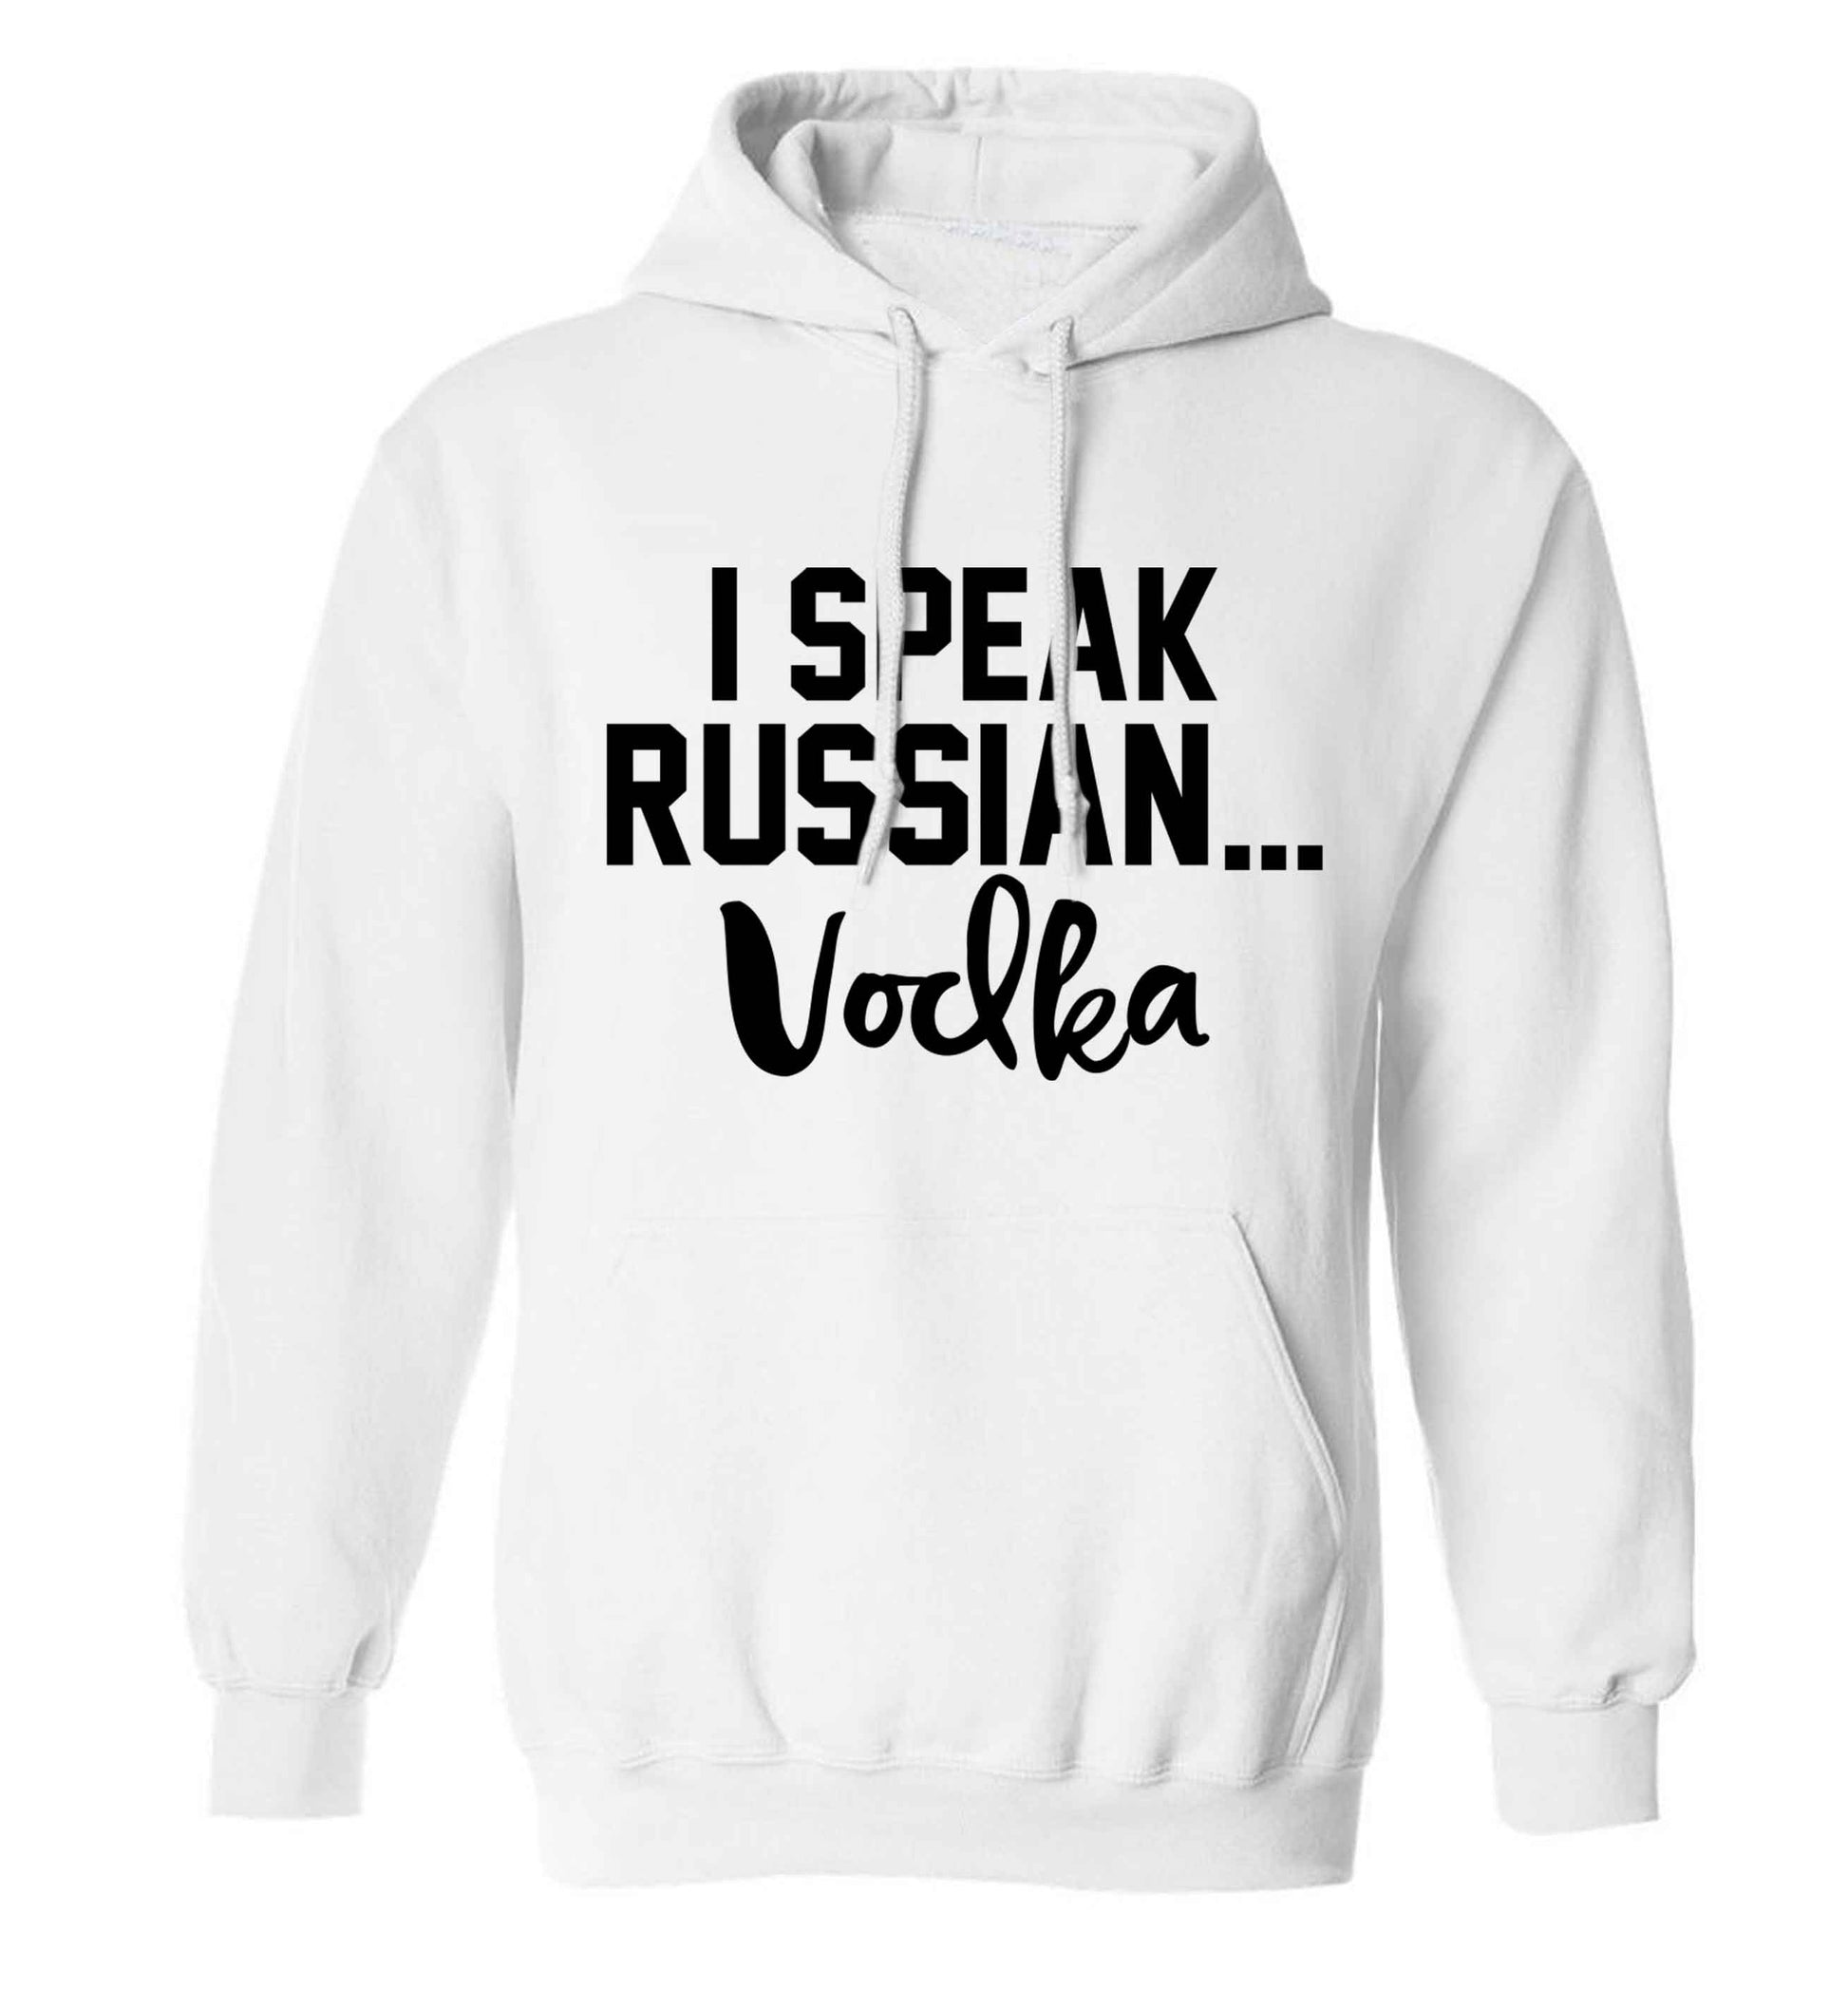 I speak russian...vodka adults unisex white hoodie 2XL